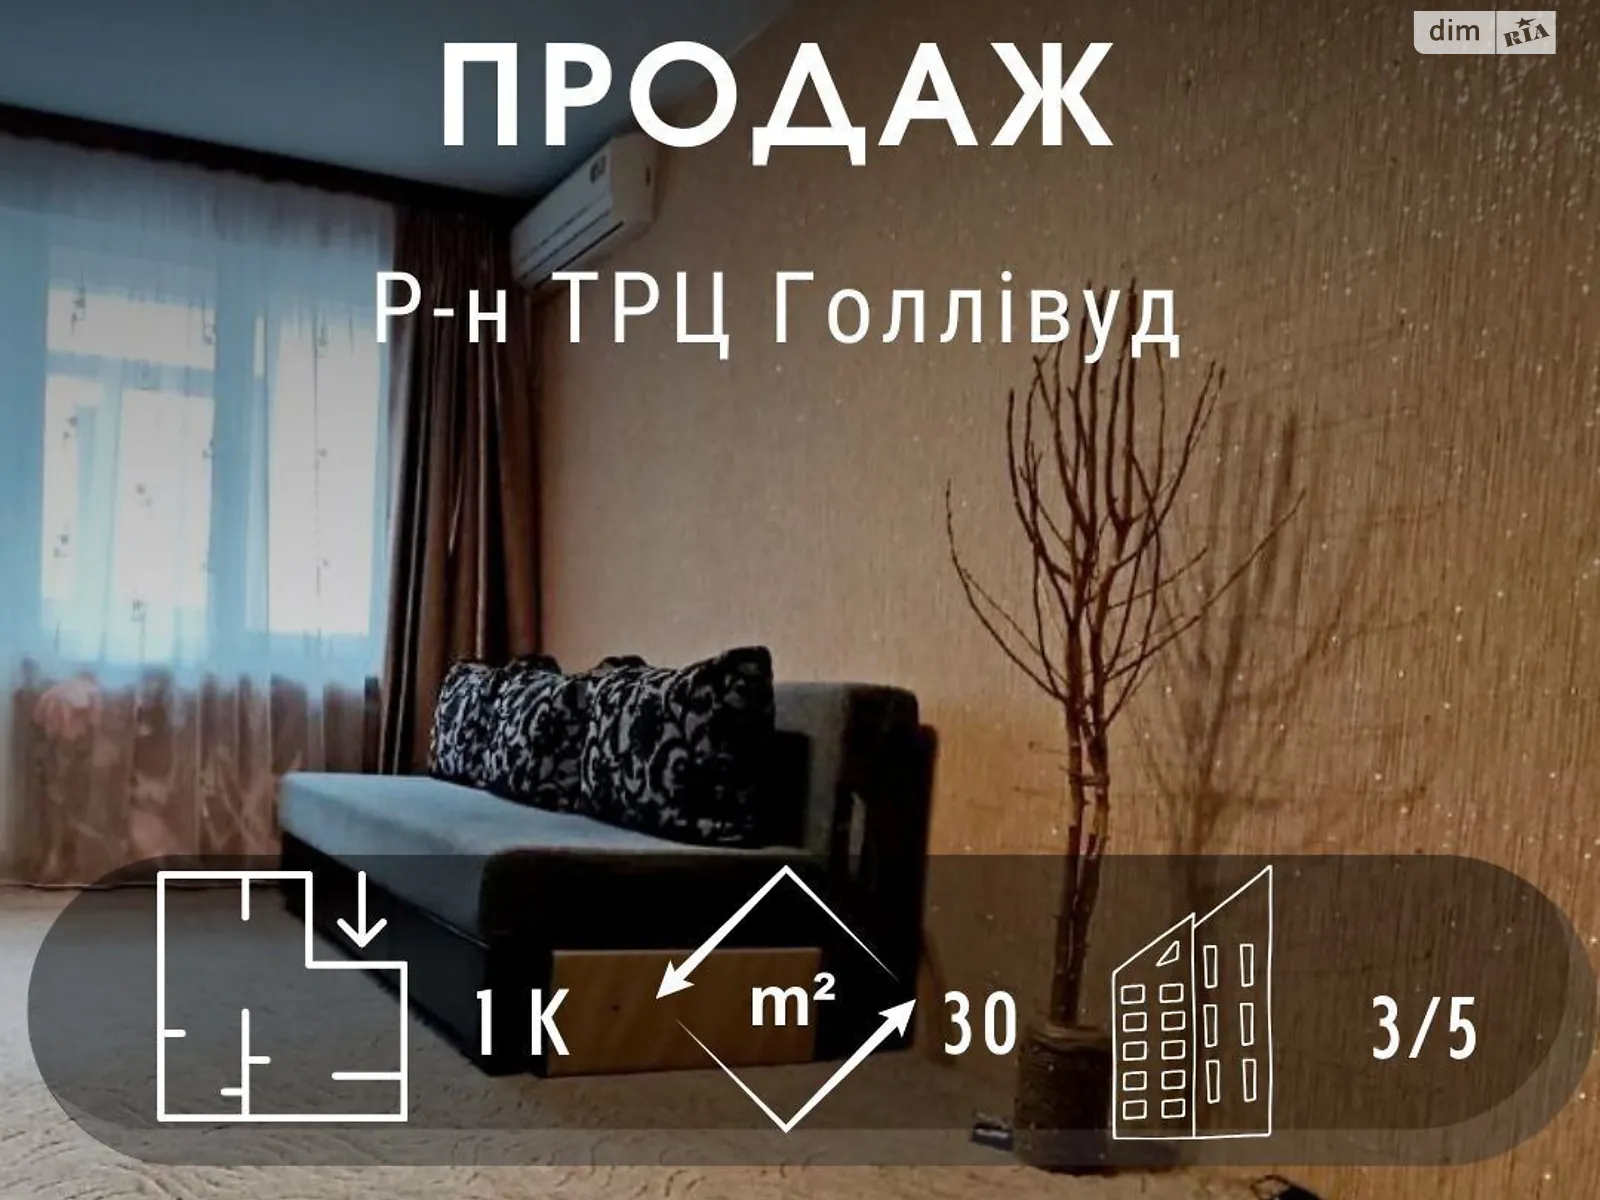 Продается 1-комнатная квартира 30 кв. м в Чернигове - фото 1